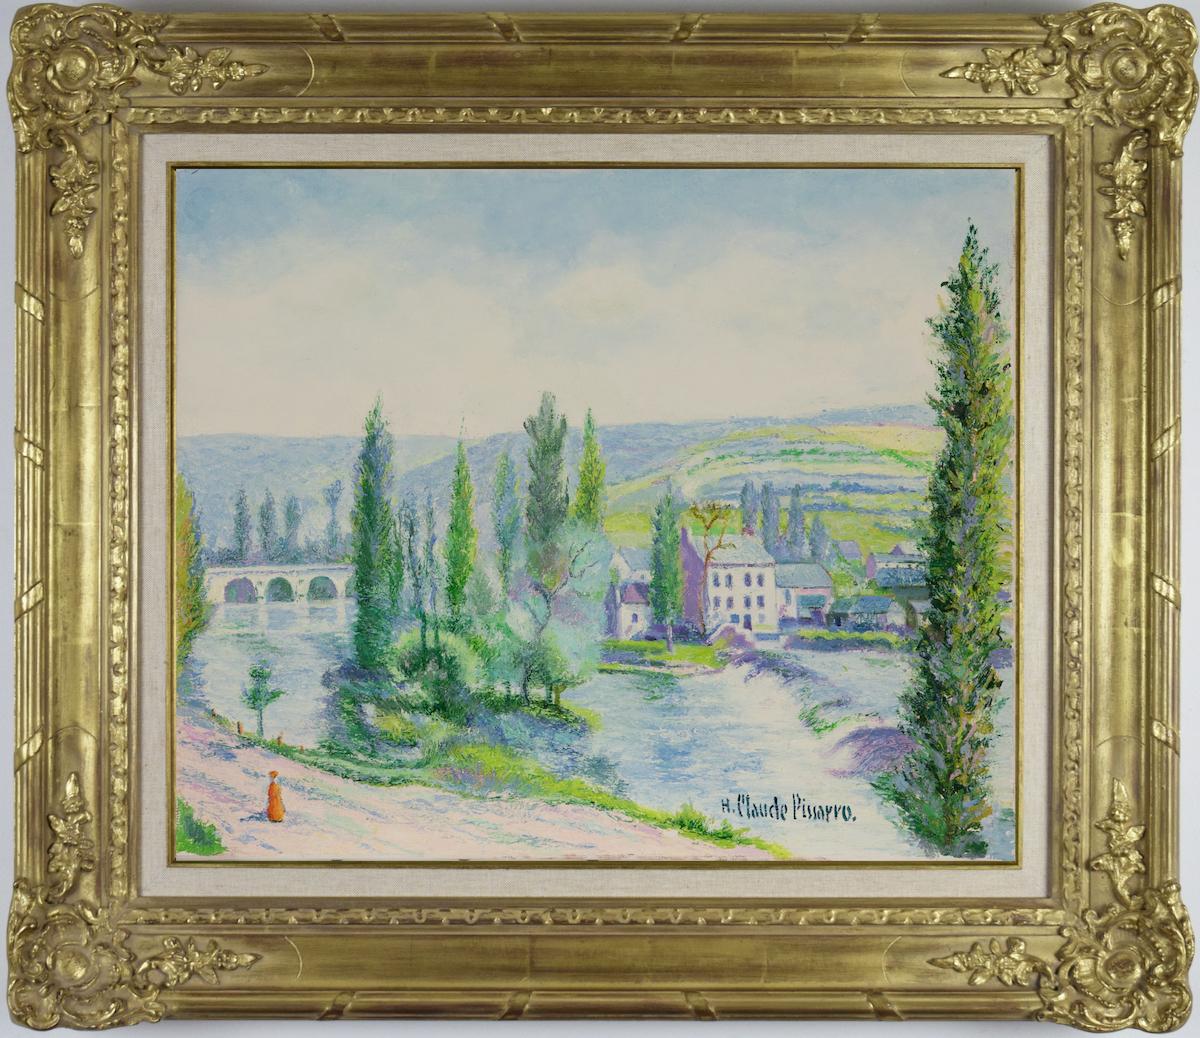 L'Orne au Pont de Vey von H. Claude Pissarro – Postimpressionistischer Stil des Postimpressionismus – Painting von Hughes Claude Pissarro